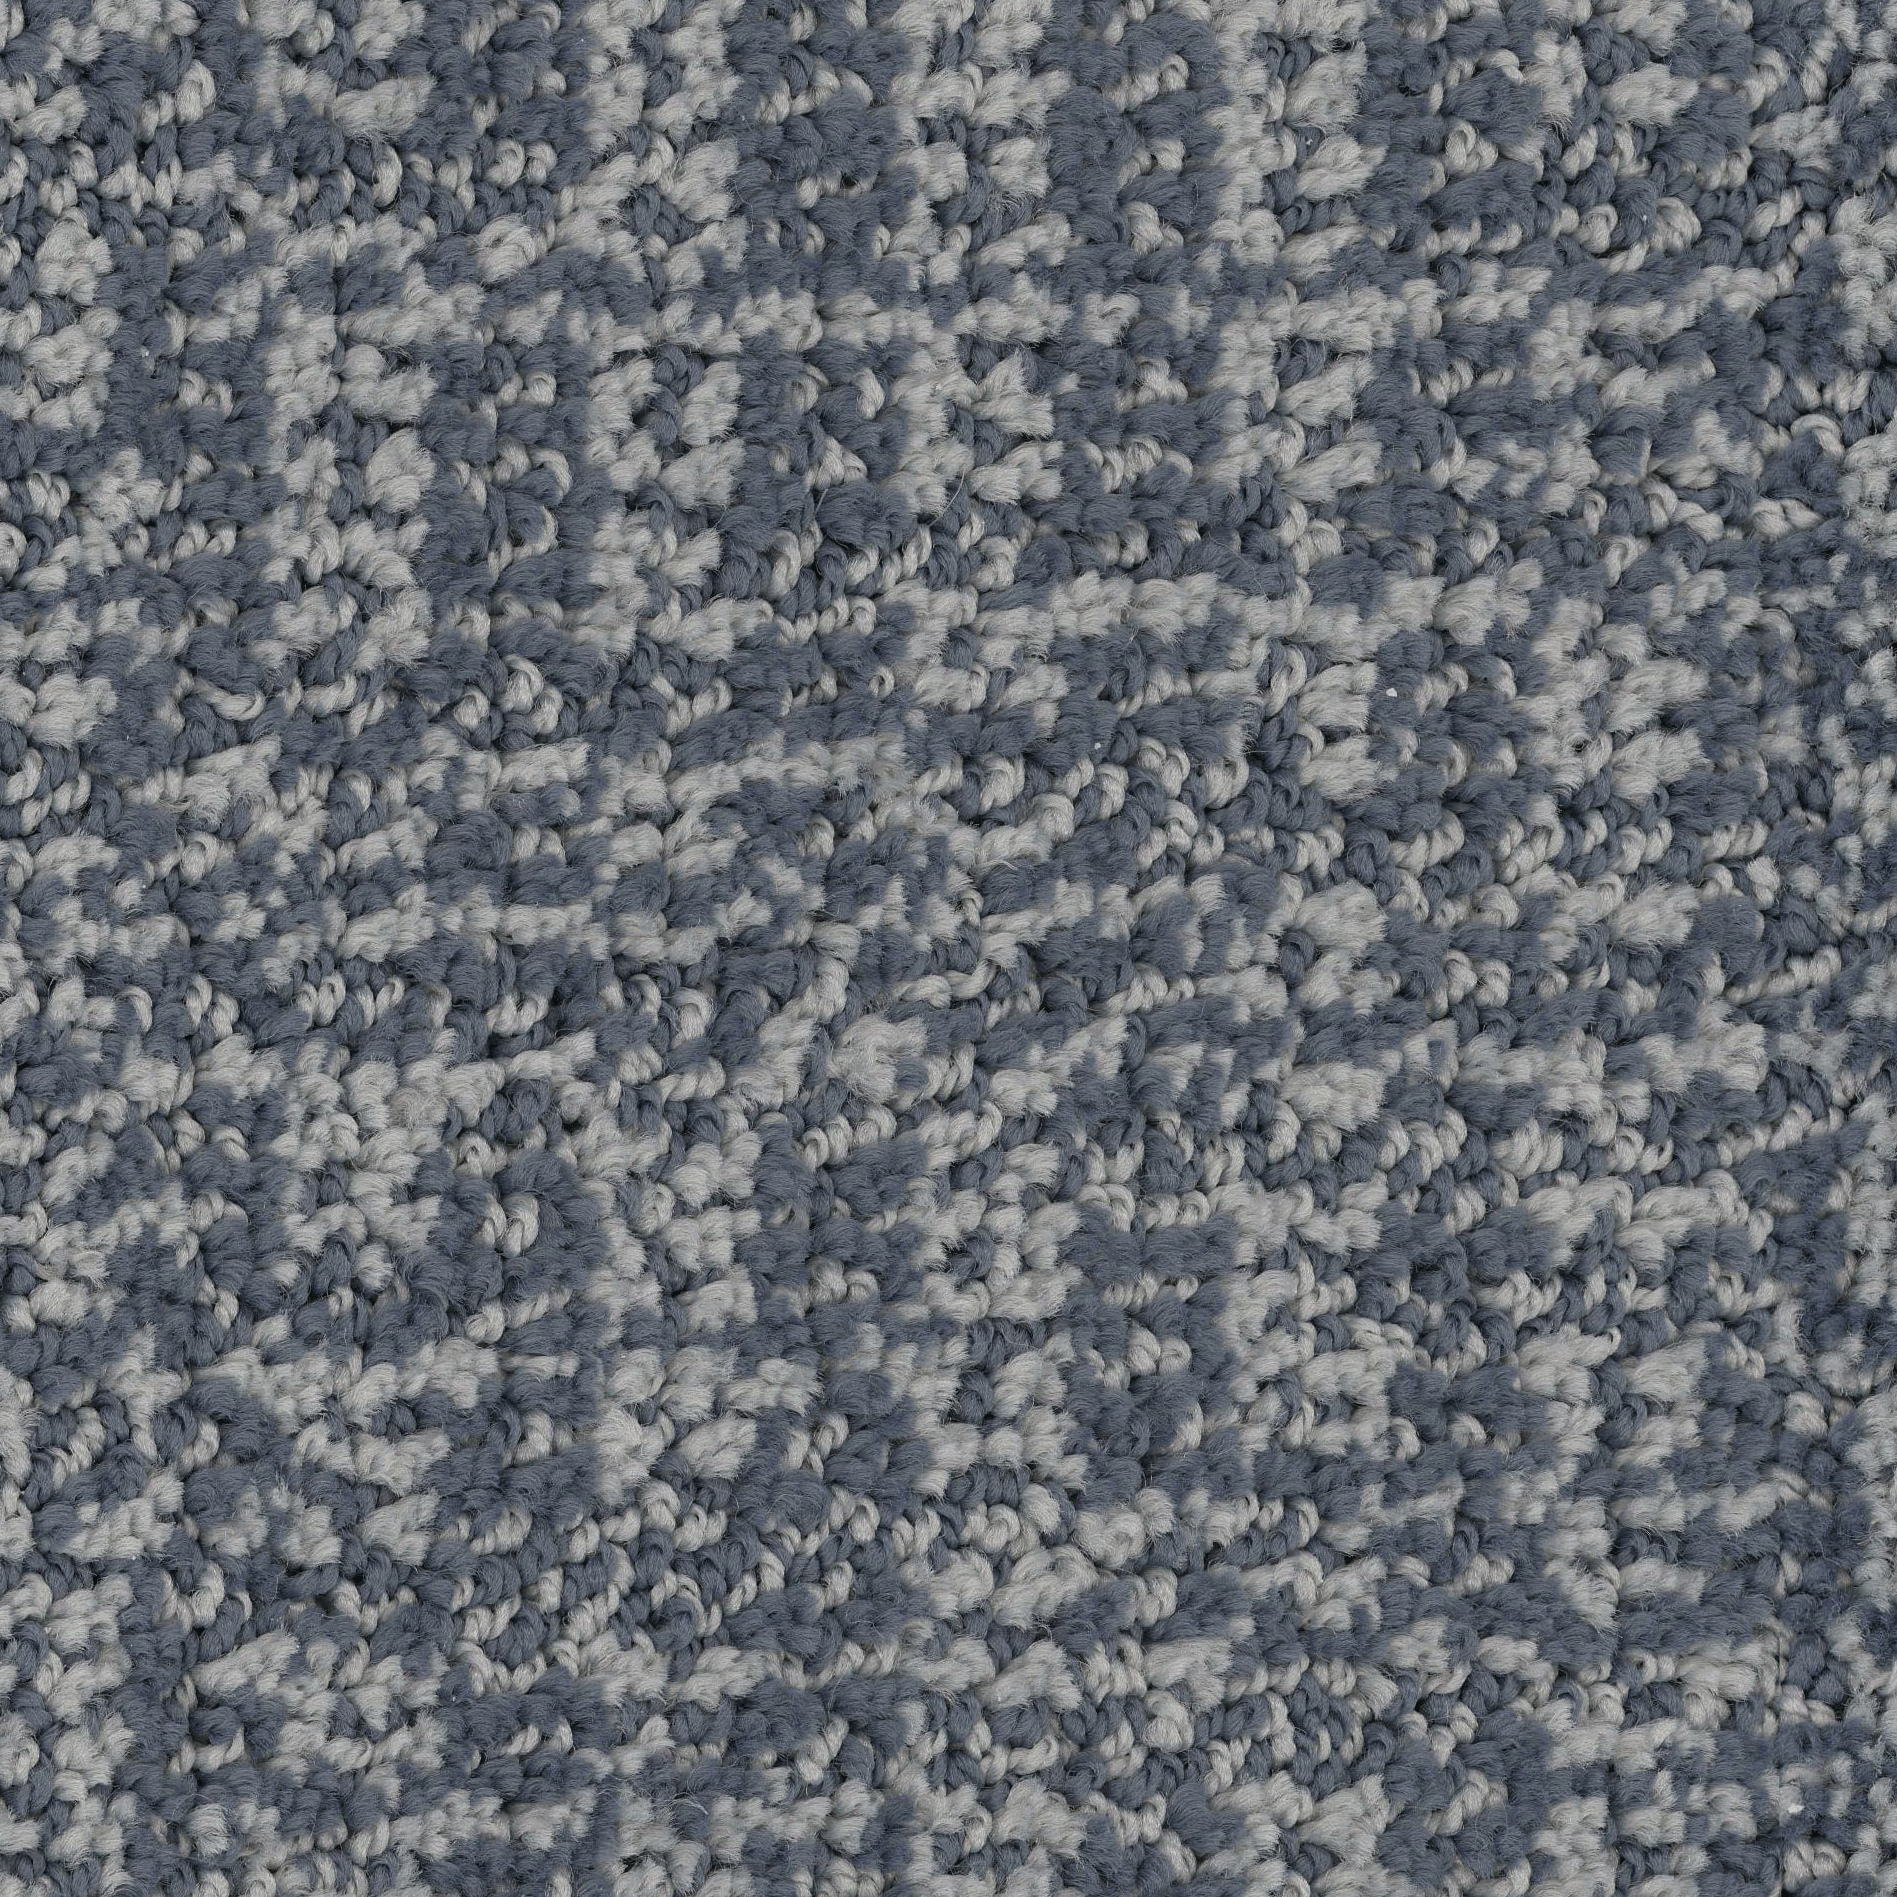 Berber/Loop Carpet in Rockville from Aladdin Carpet and Floors